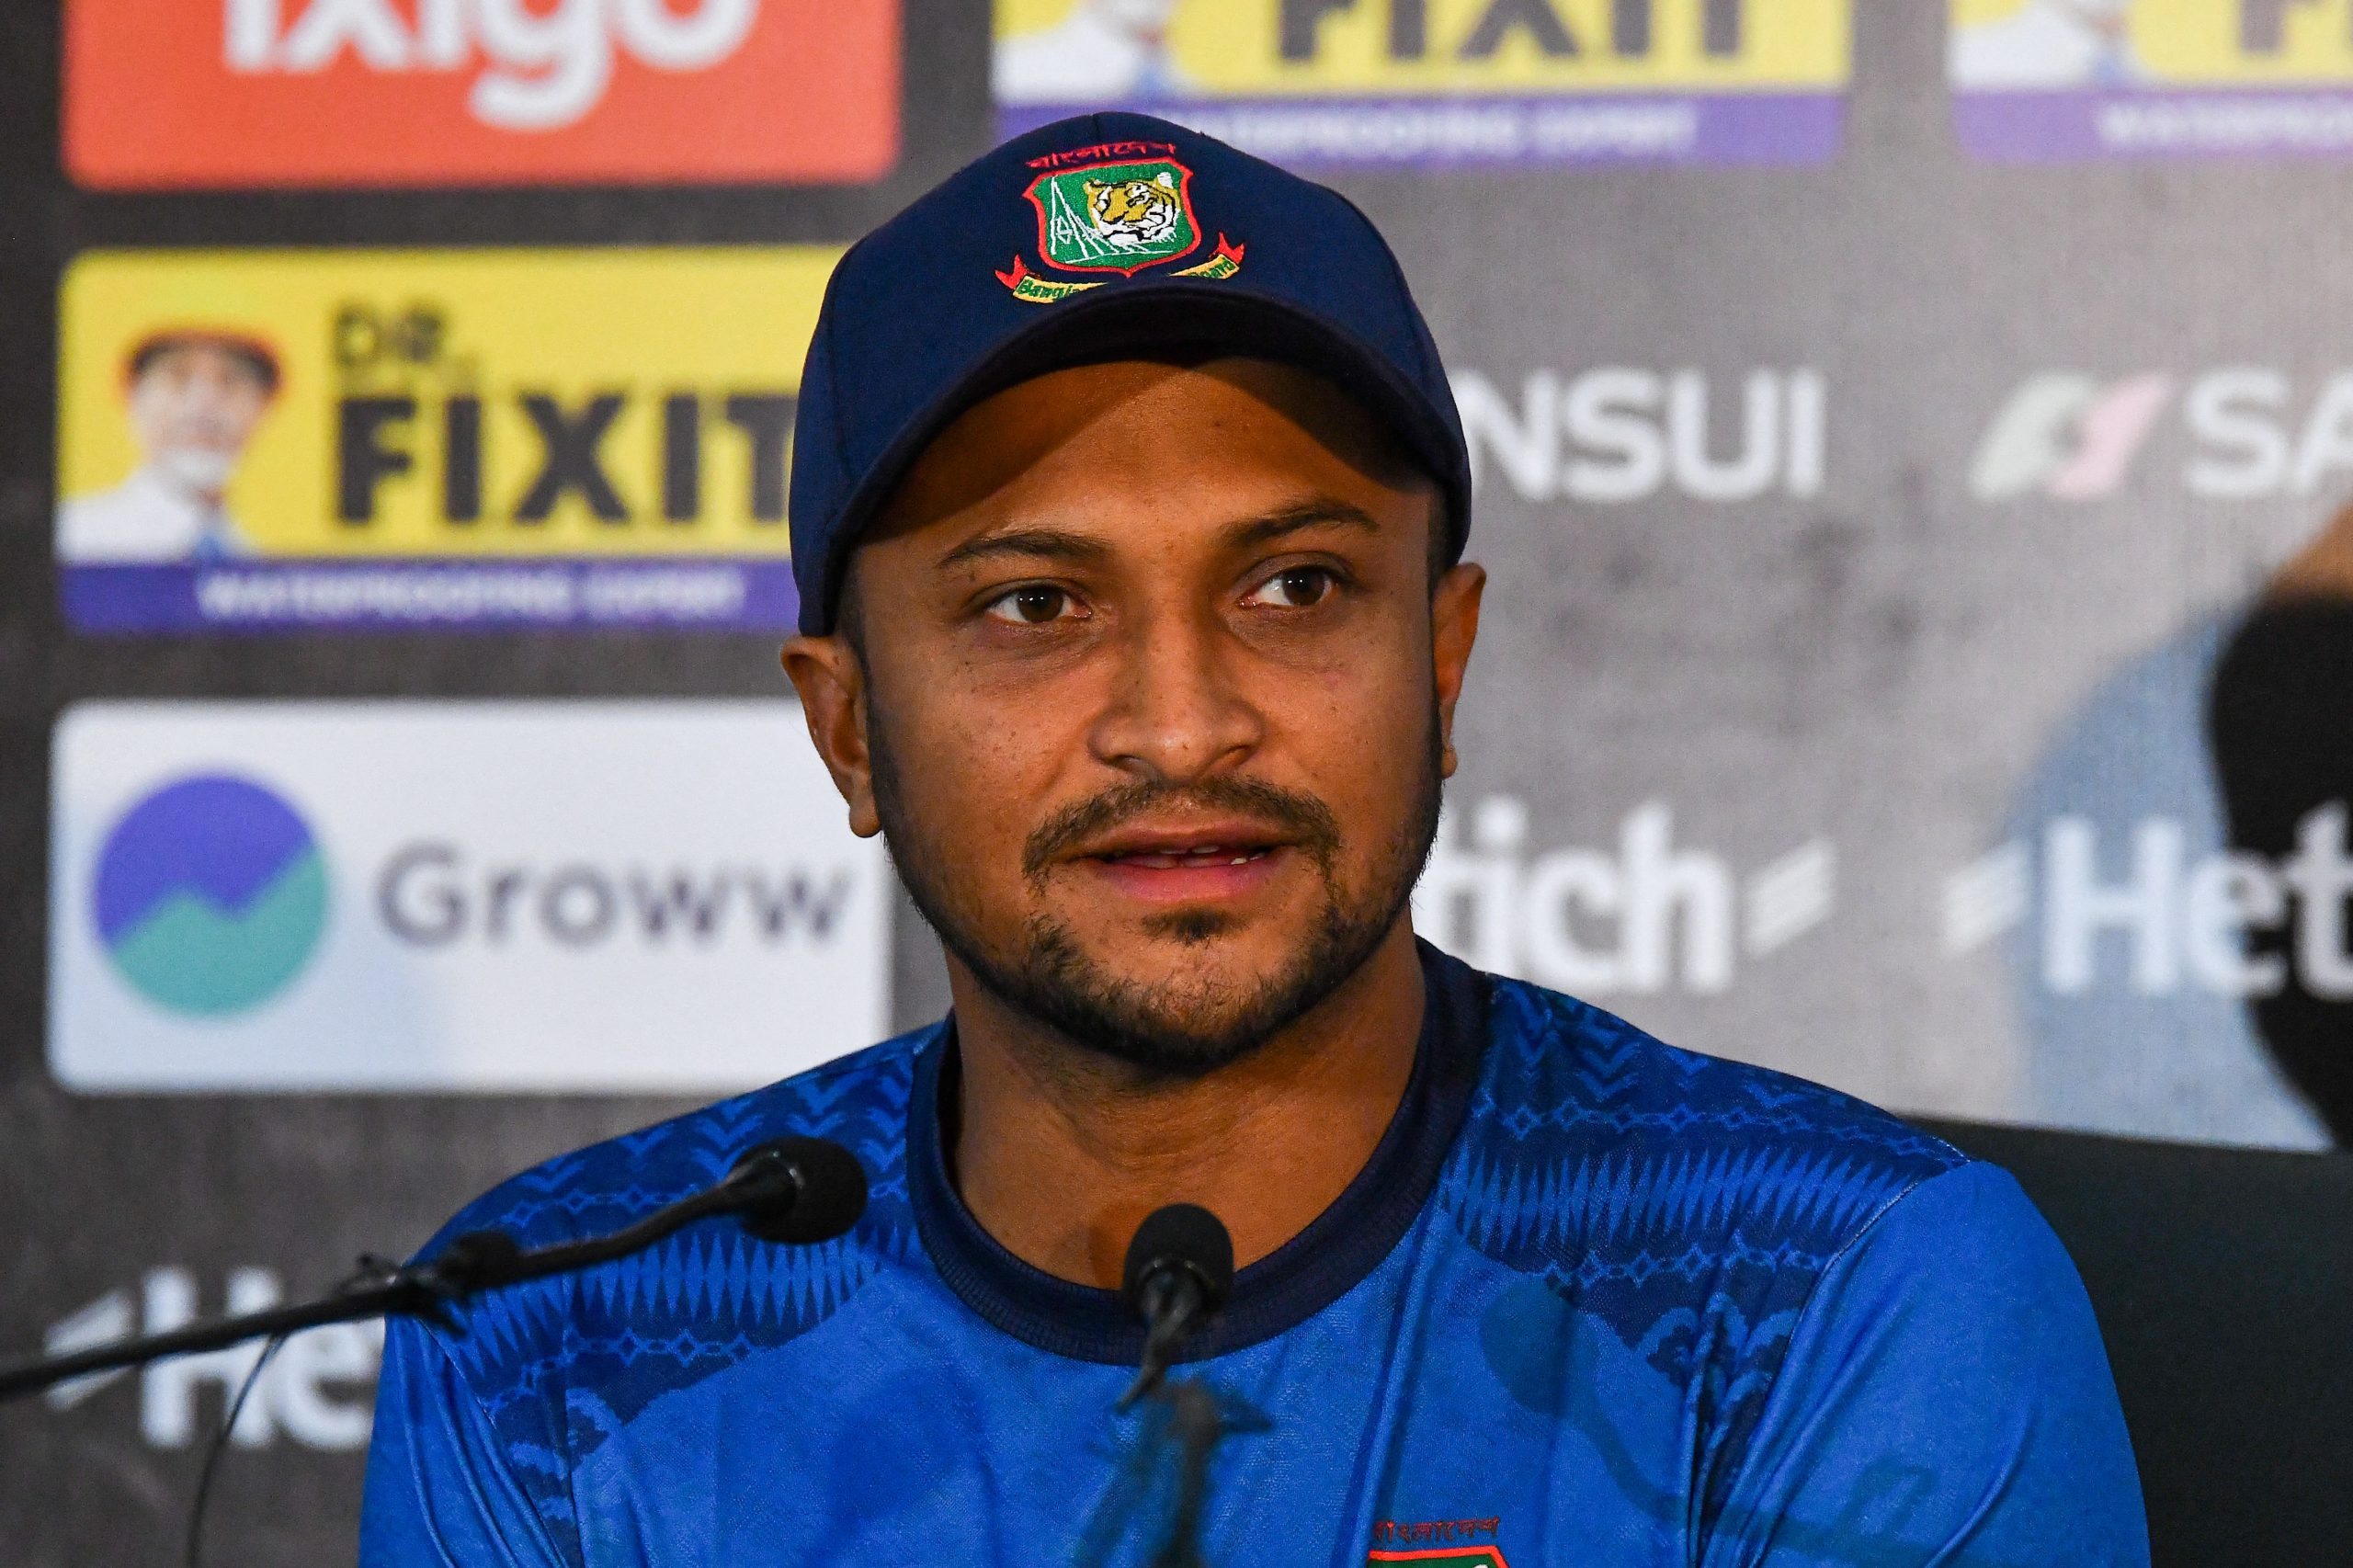 Bangladesh Cricketer Shakib Al Hasan Joins Politics, May Contest Polls